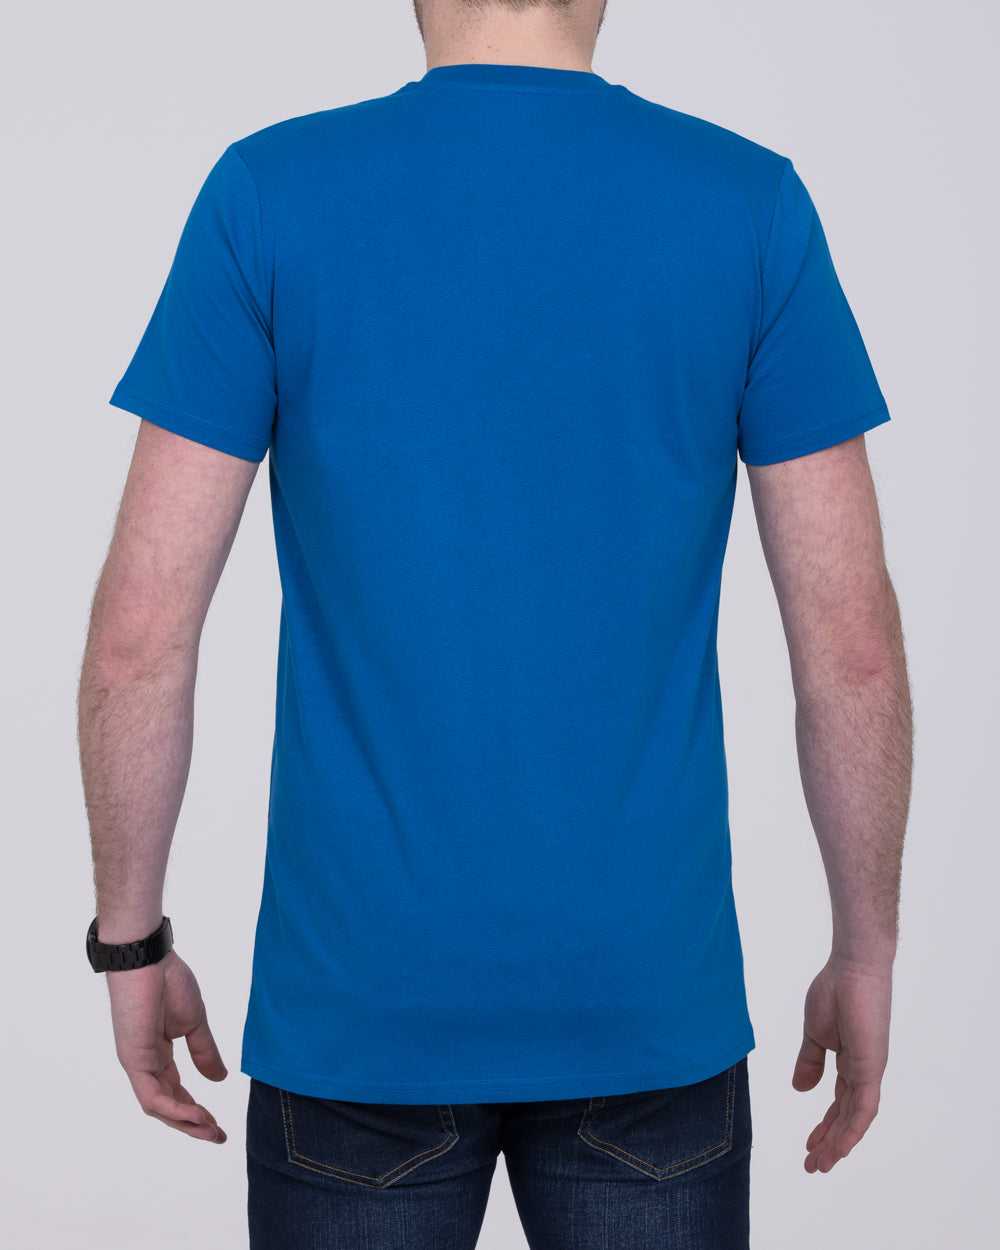 Girav Sydney Tall T-Shirt (royal blue)